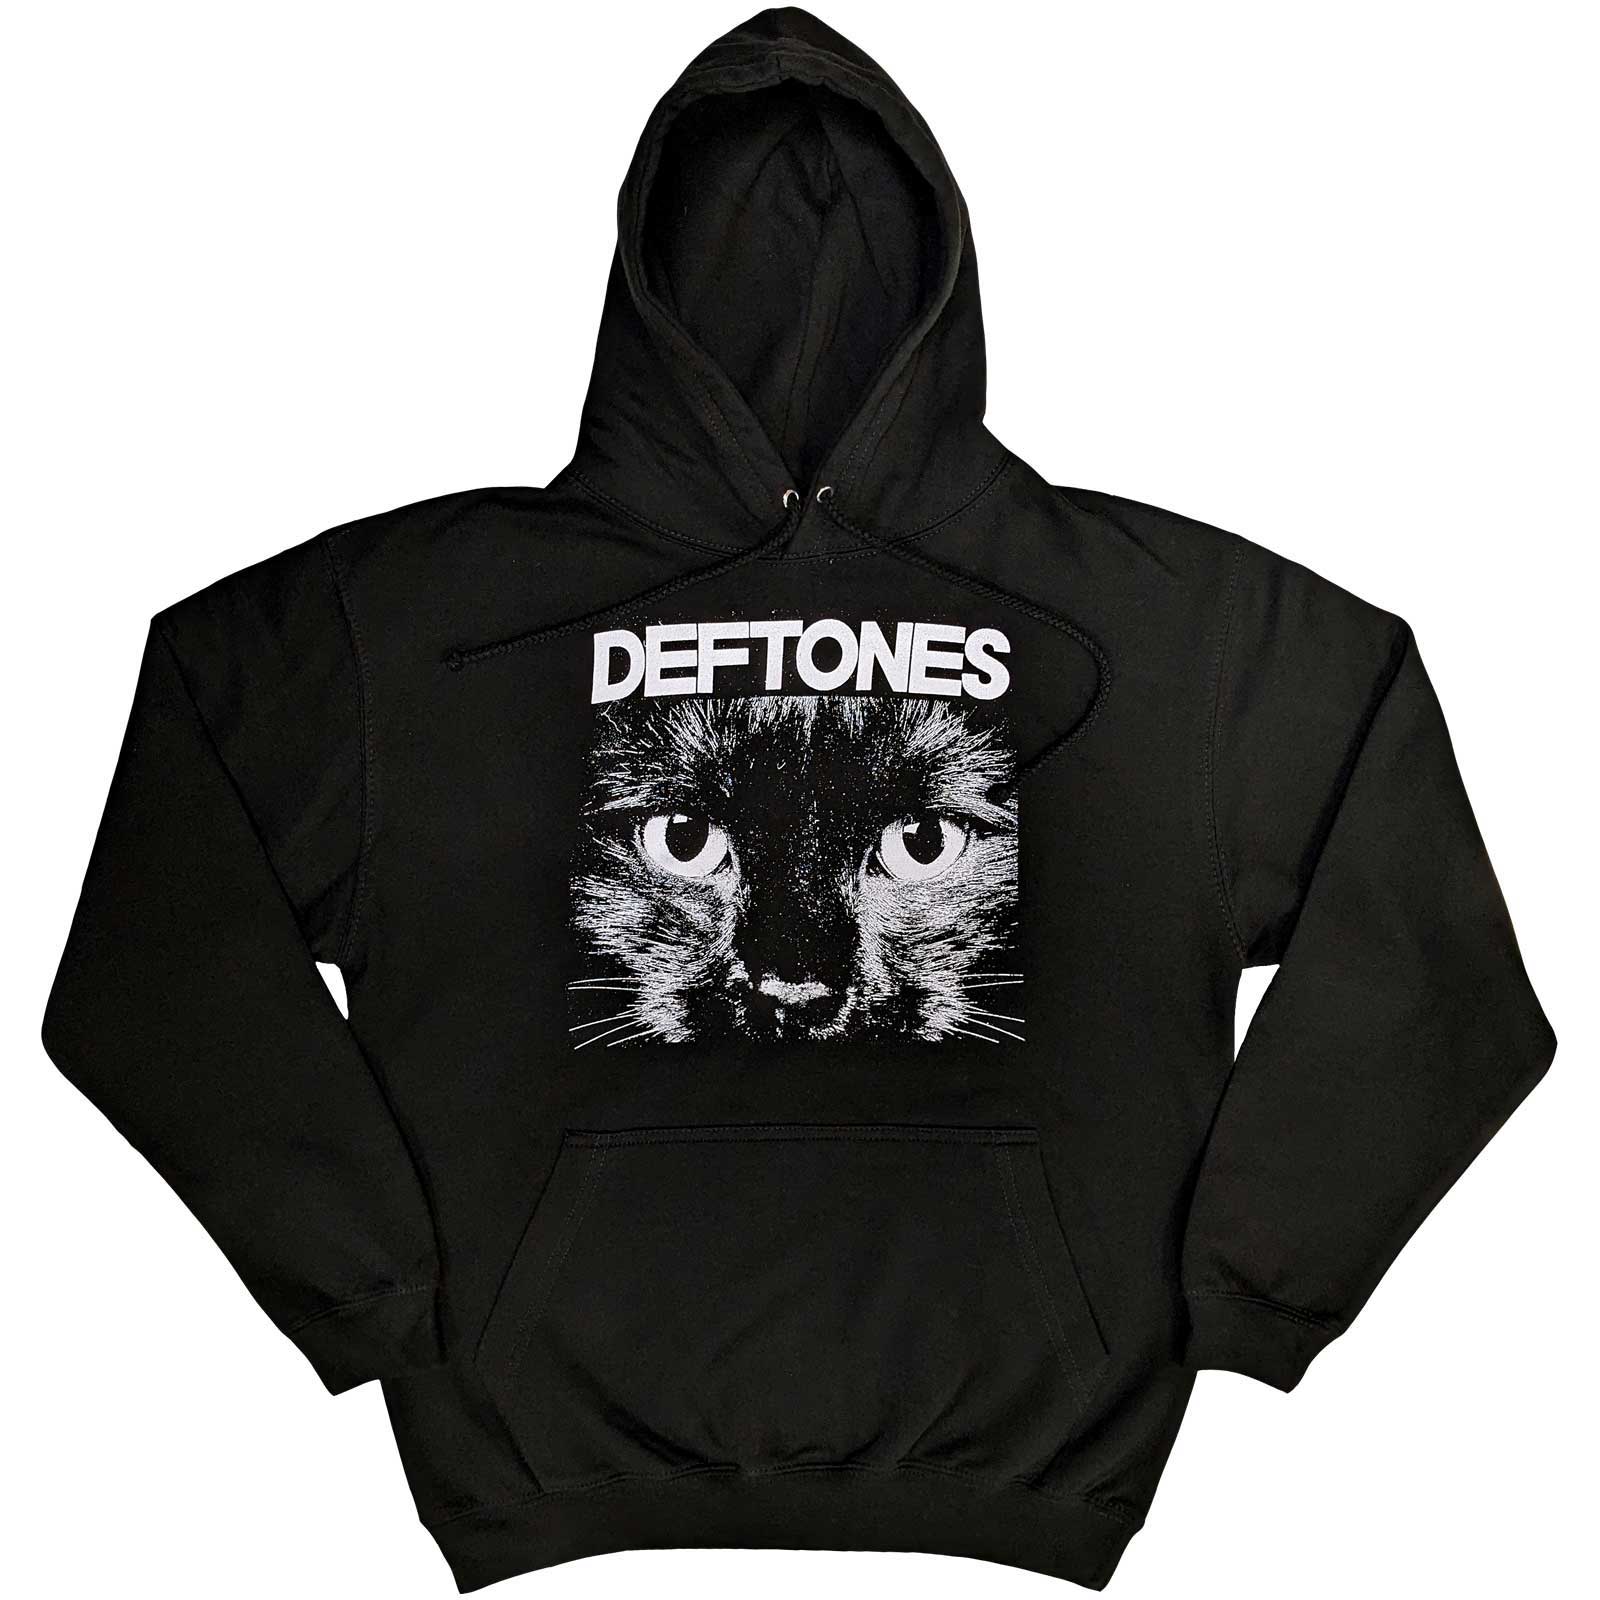 Deftones - Sphynx